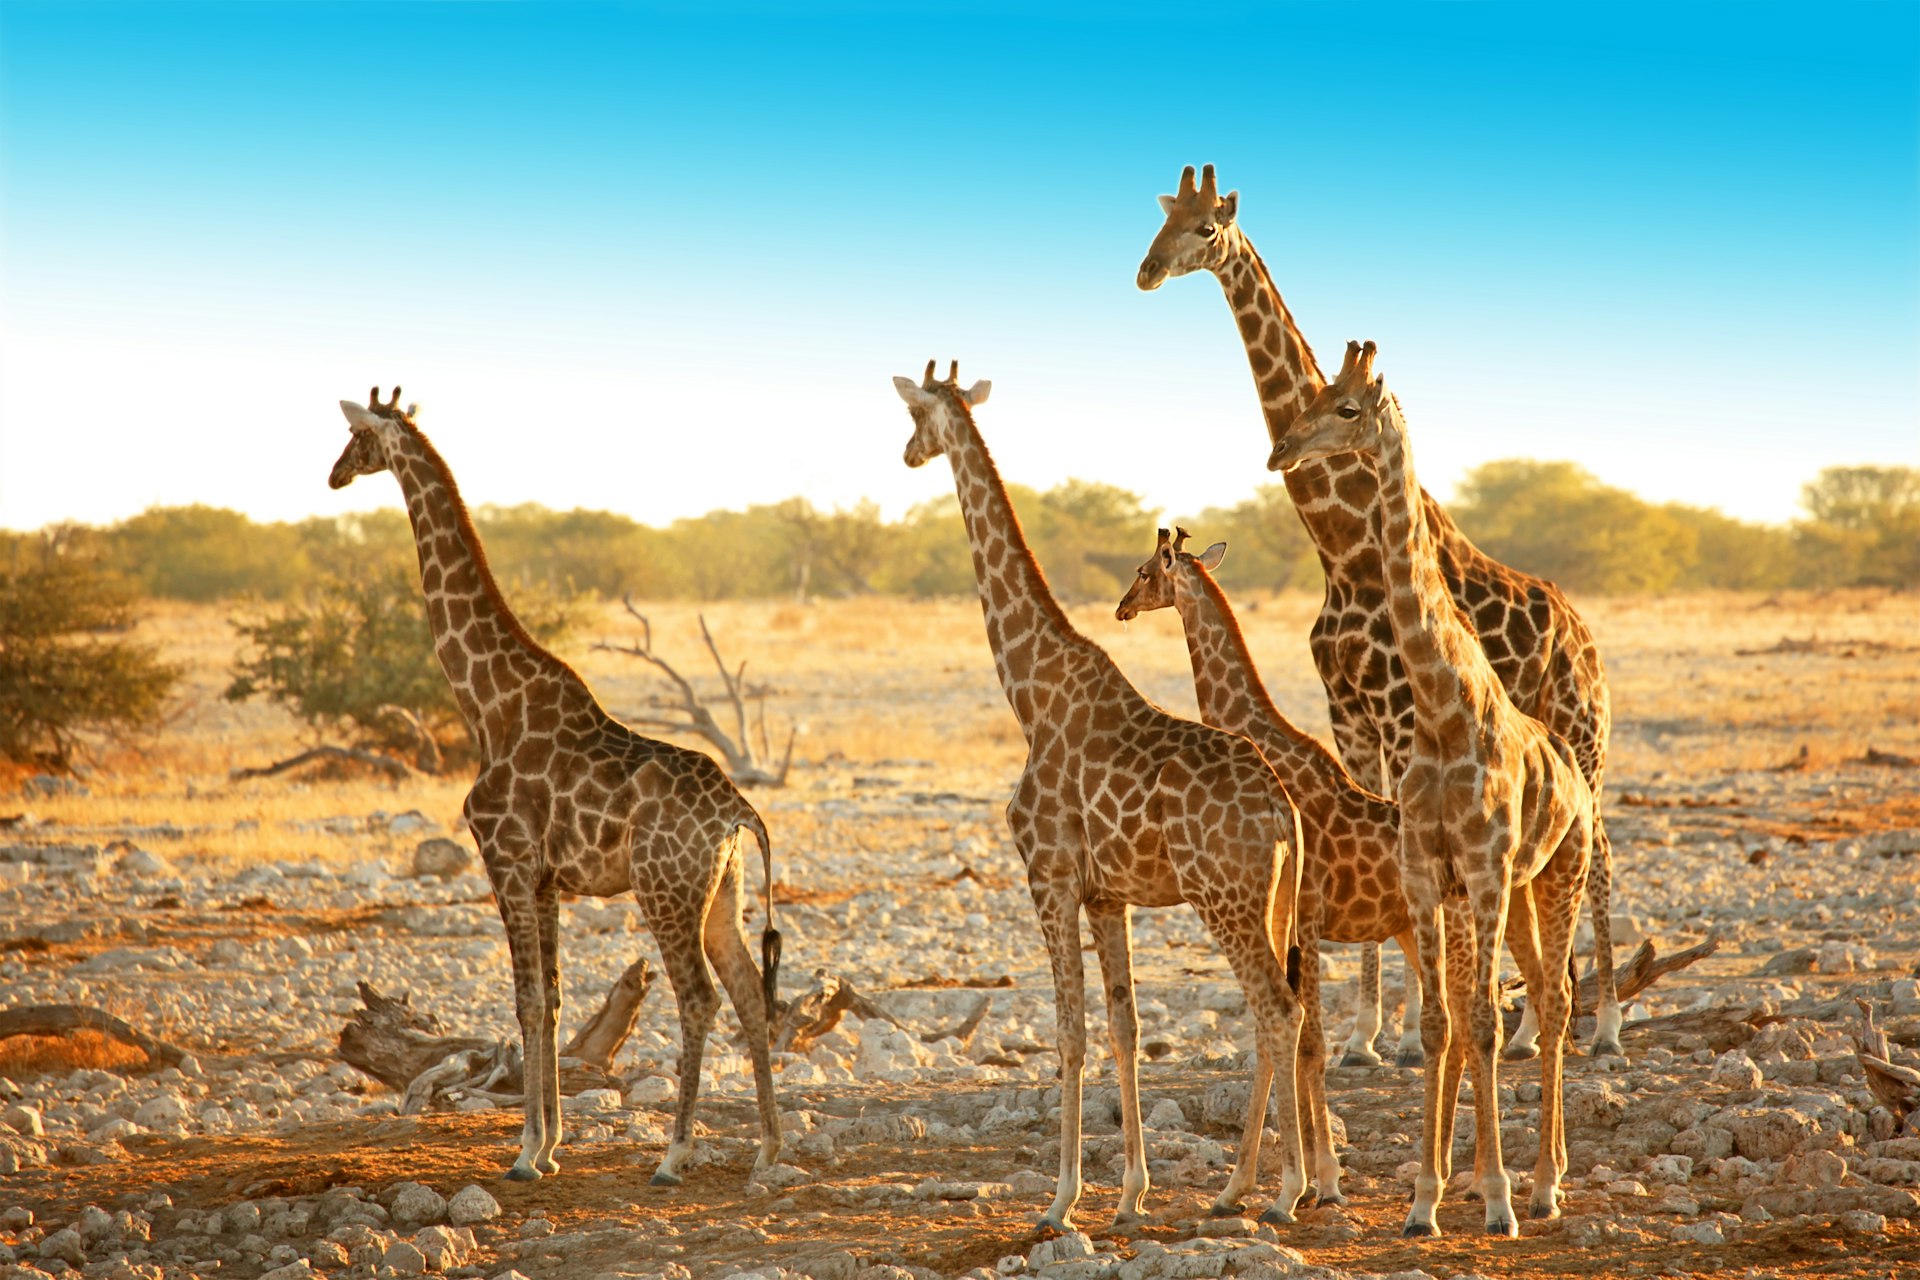 A family of five wild giraffes standing in a dry savannah landscape near Okaukuejo waterhole in Etosha National Park in Namibia, Africa. 